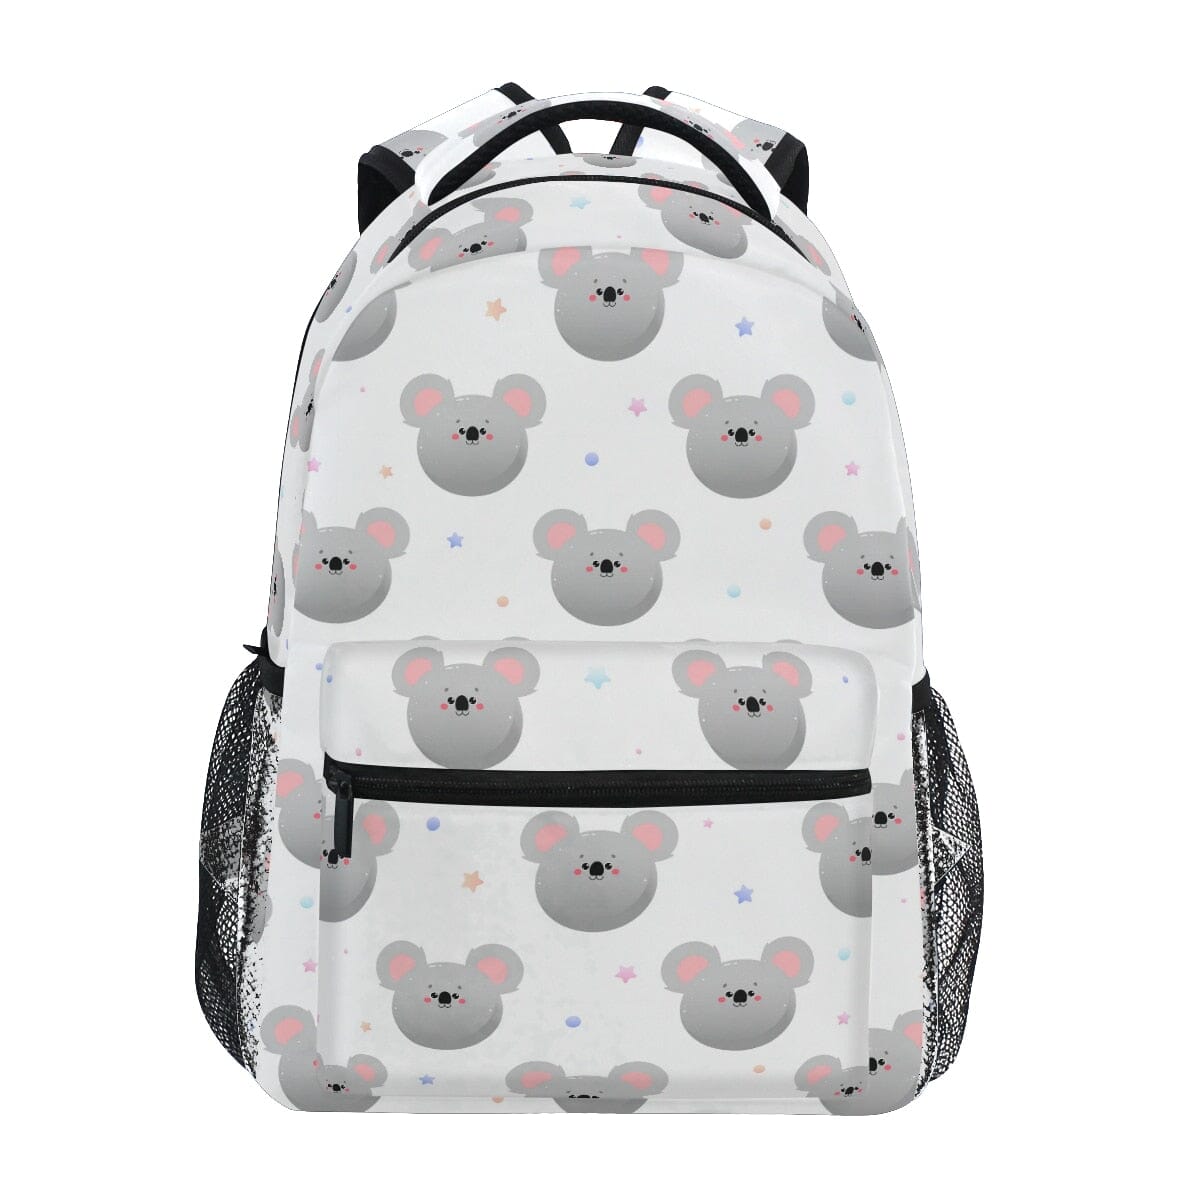 Koala Backpack The Store Bags 05 